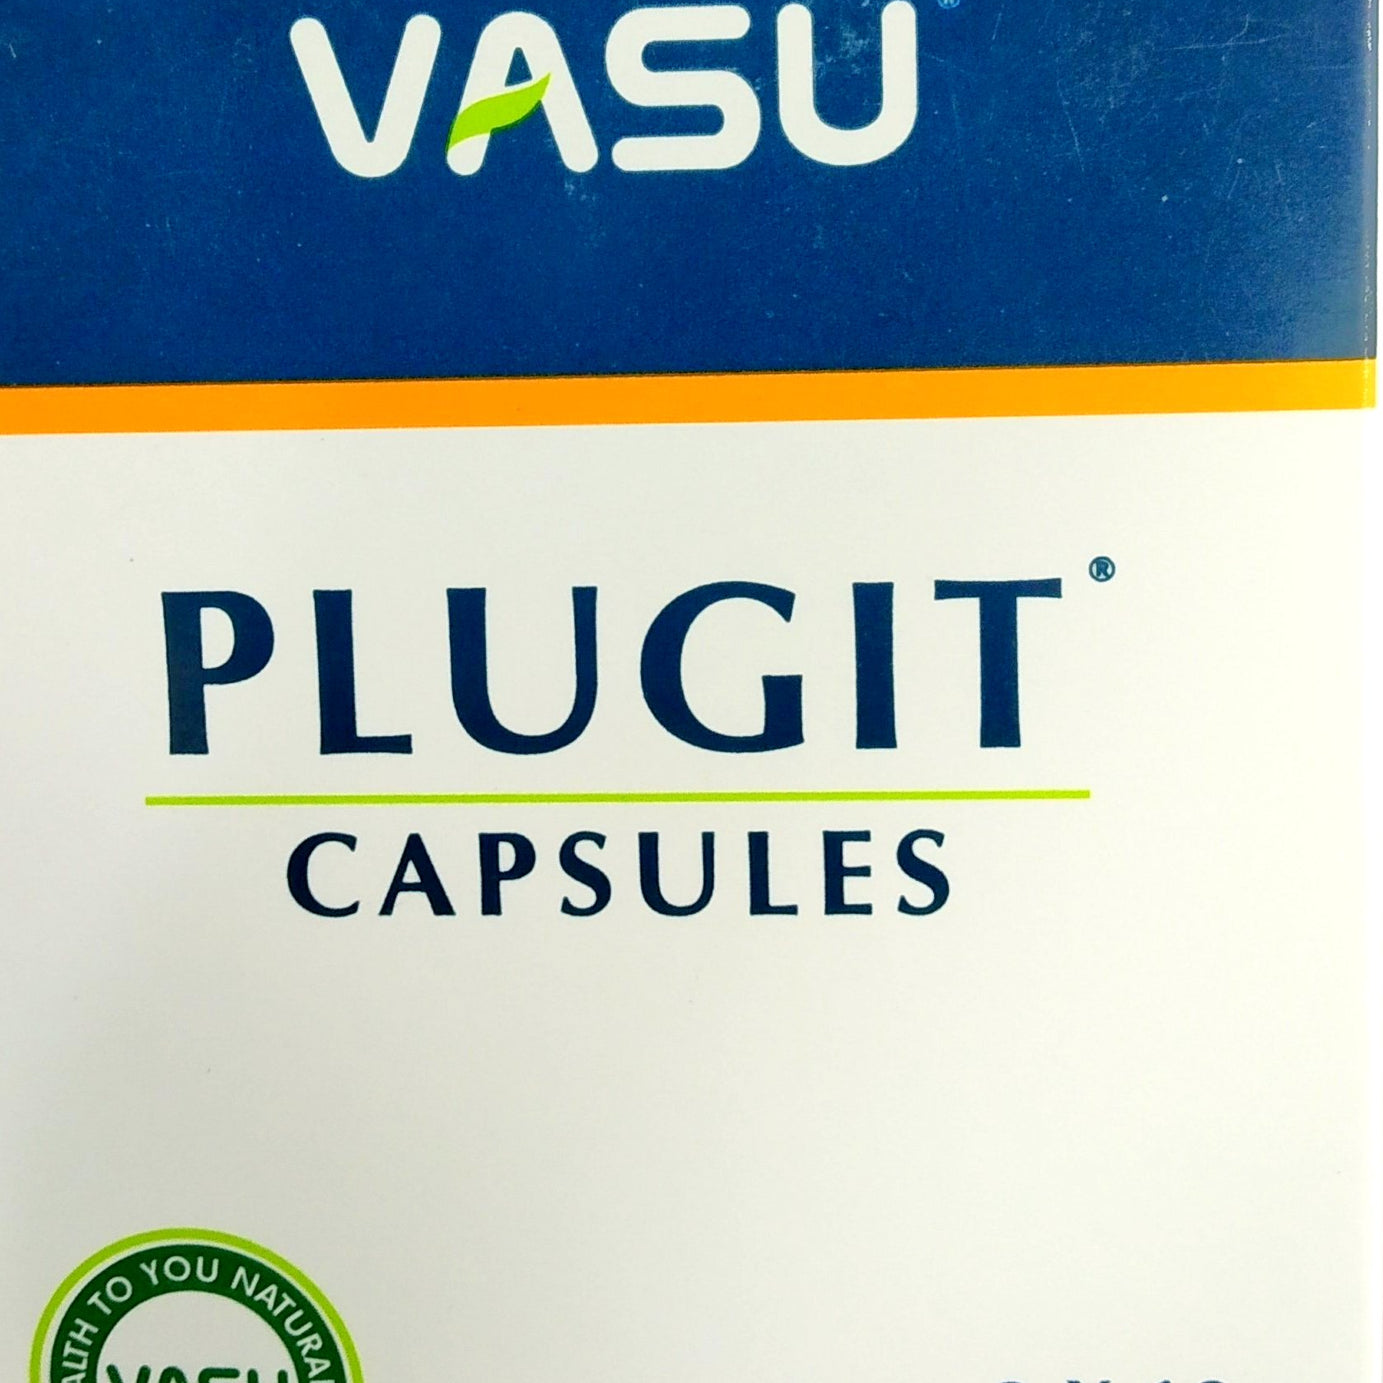 Shop Plugit 10Capsules at price 50.00 from Vasu herbals Online - Ayush Care